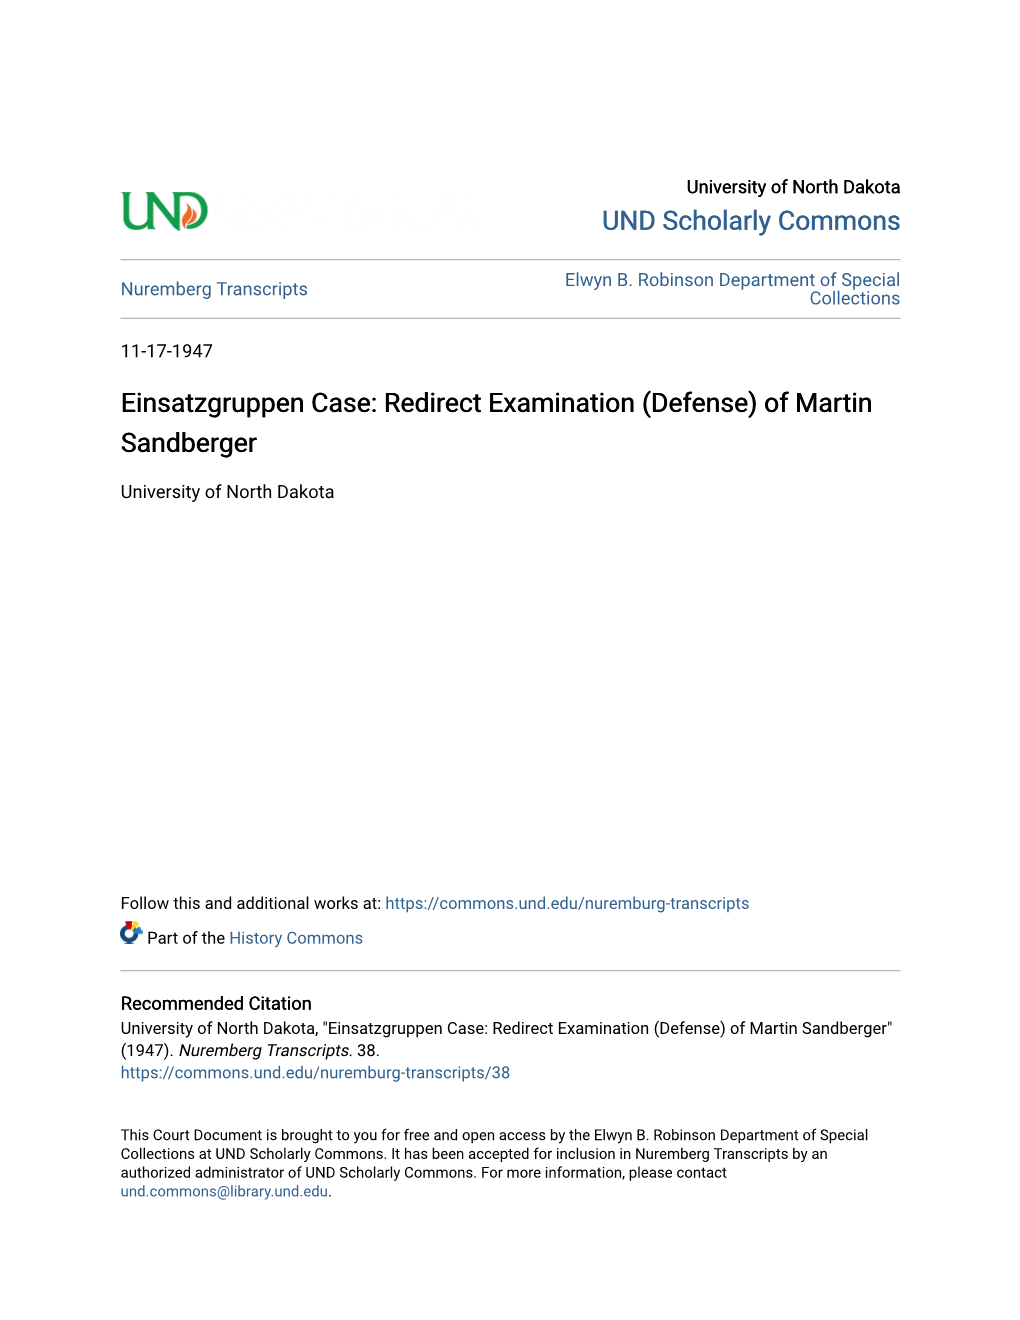 Redirect Examination (Defense) of Martin Sandberger